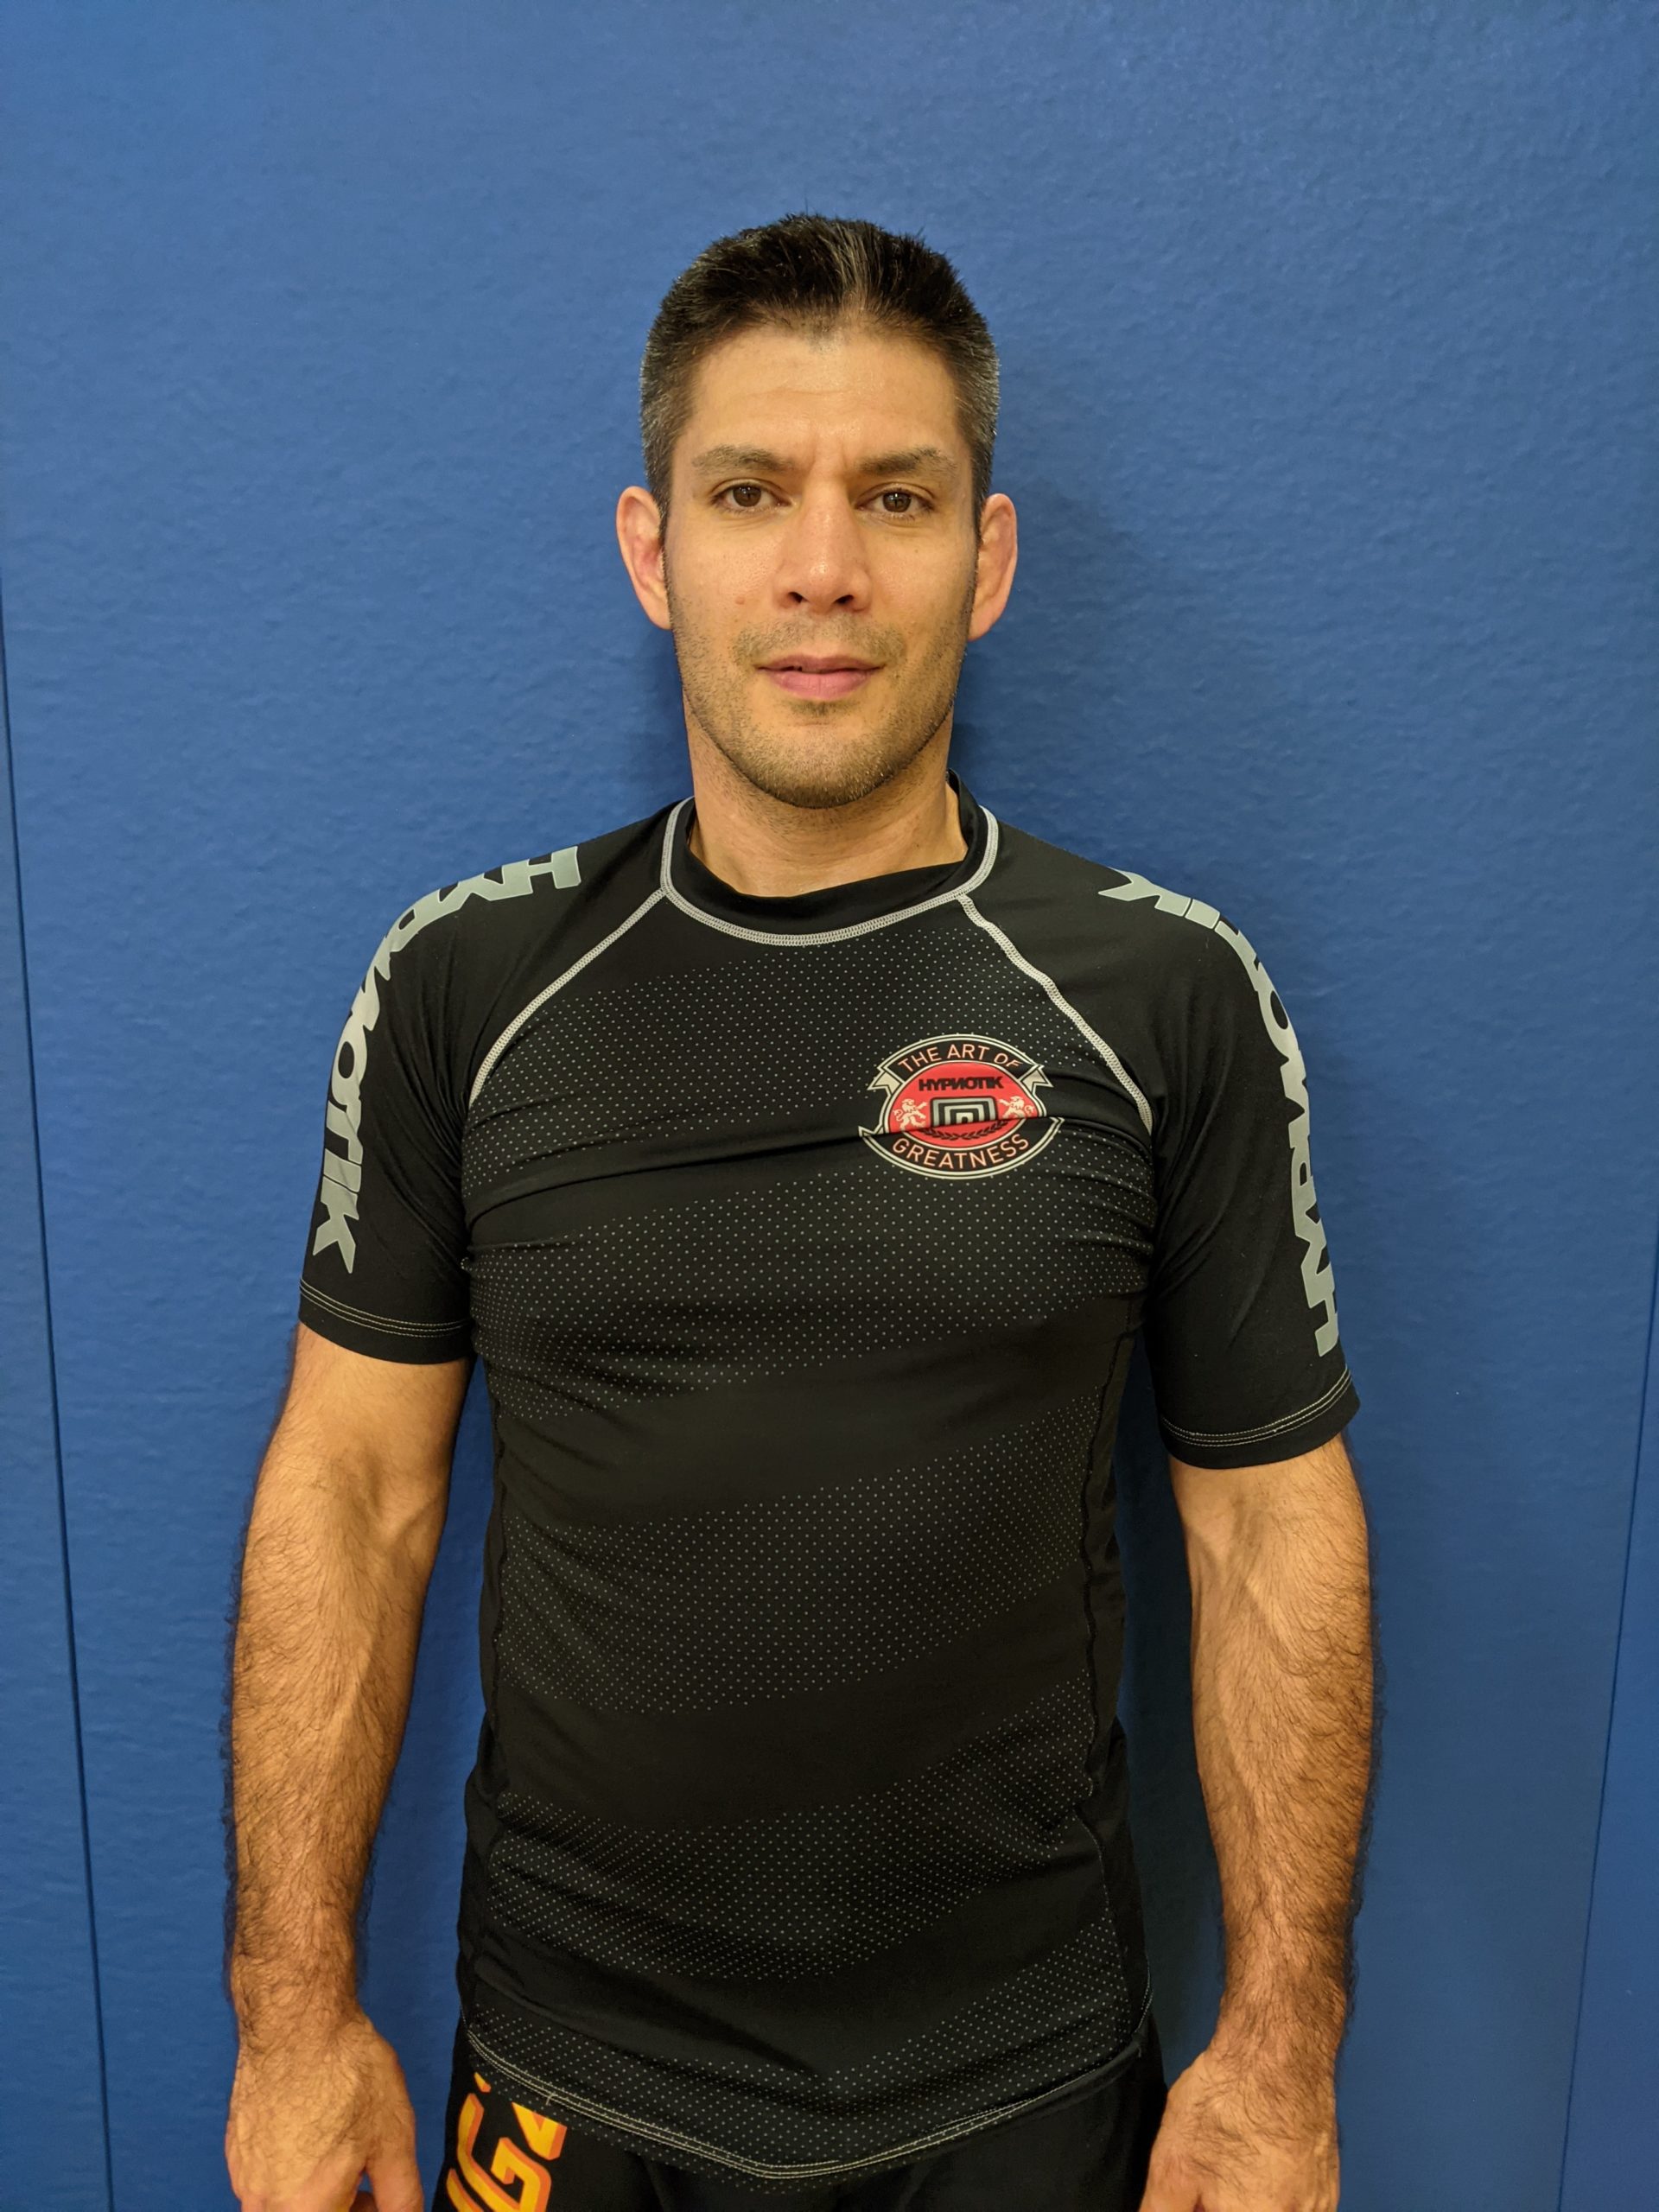 Pedro Sauer Jiu Jitsu Comp Duffle Black – FUJI Sports